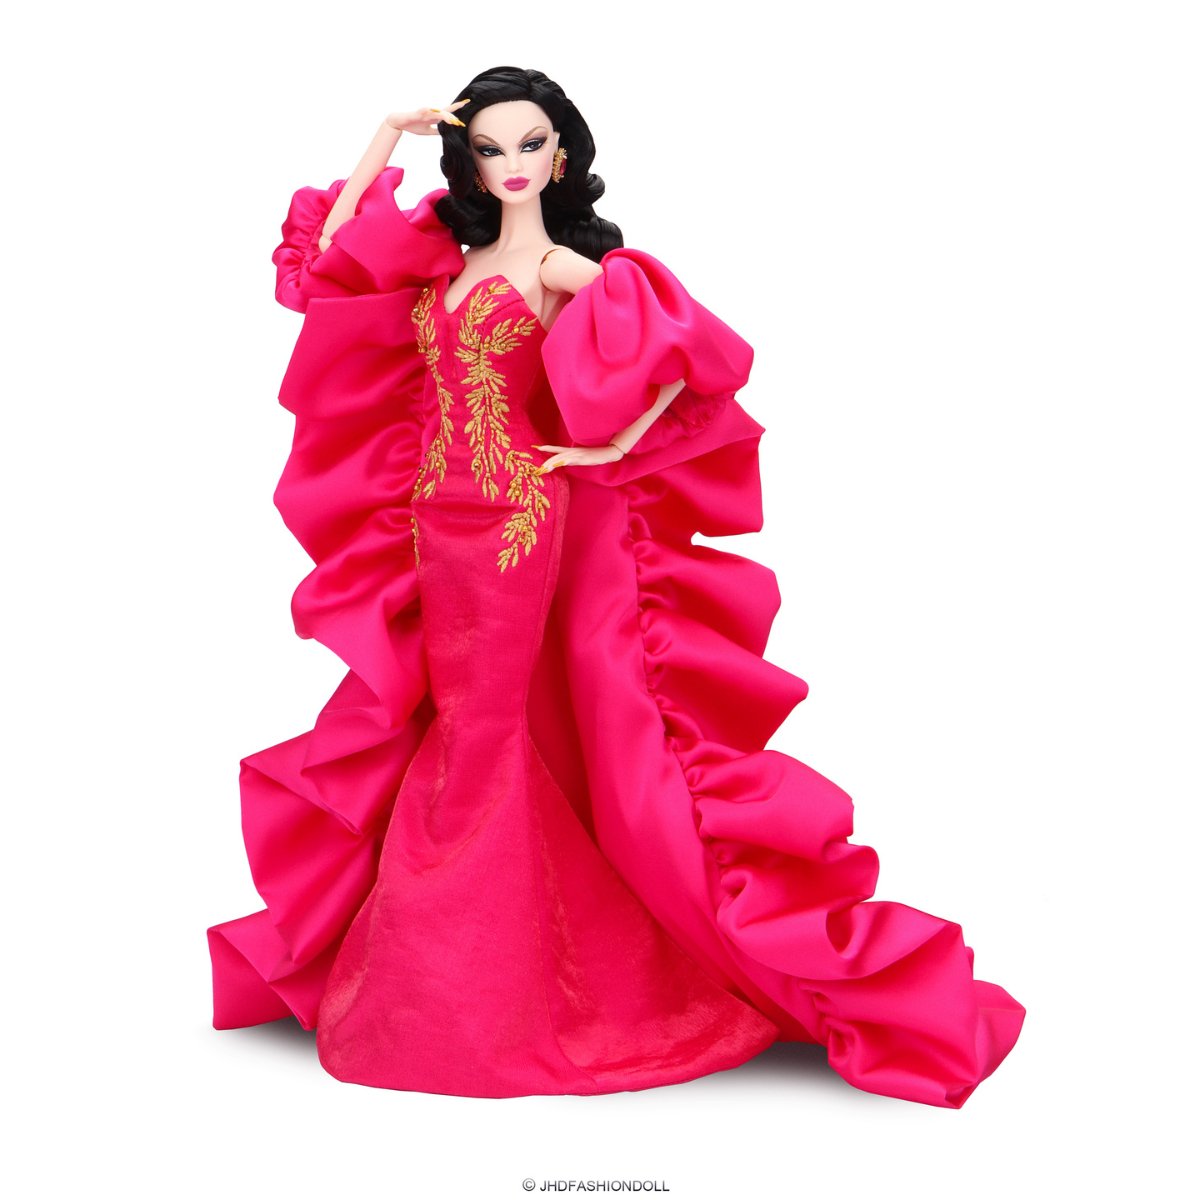 JHDFASHIONDOLL™ GLAMOROUS DARLING: MONIKA KatieGirl Doll - Simon's Collectibles